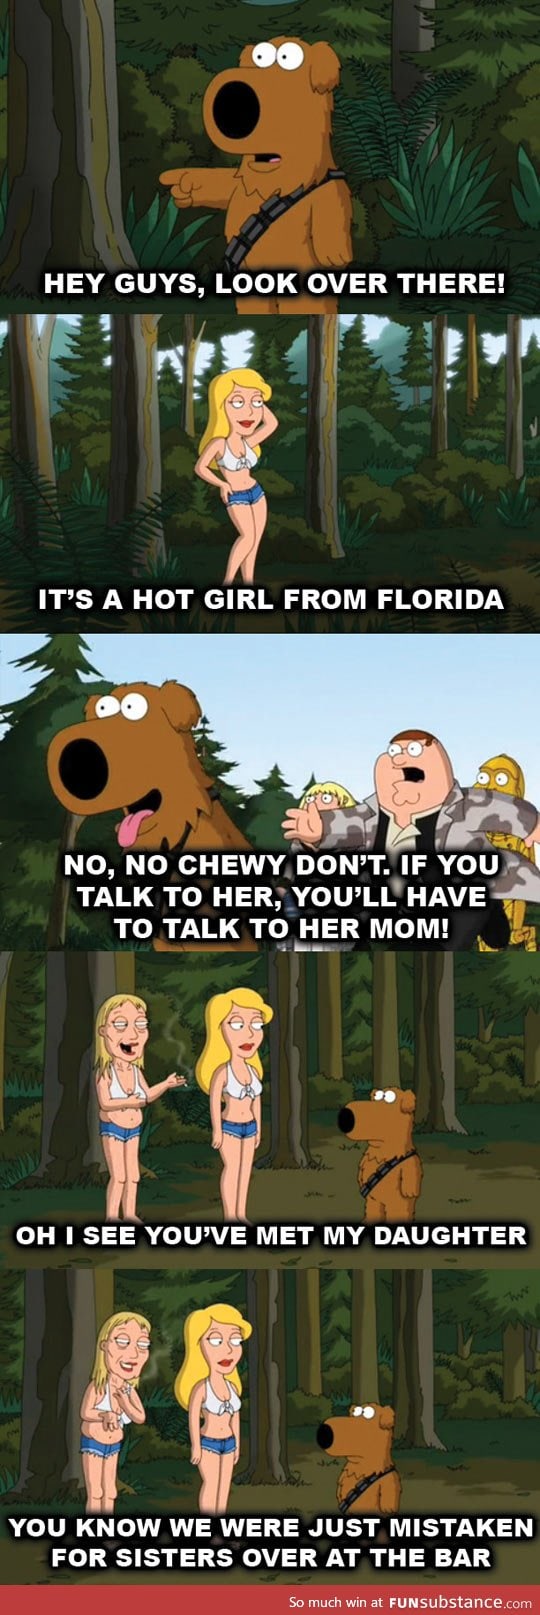 Florida girl, it's a trap